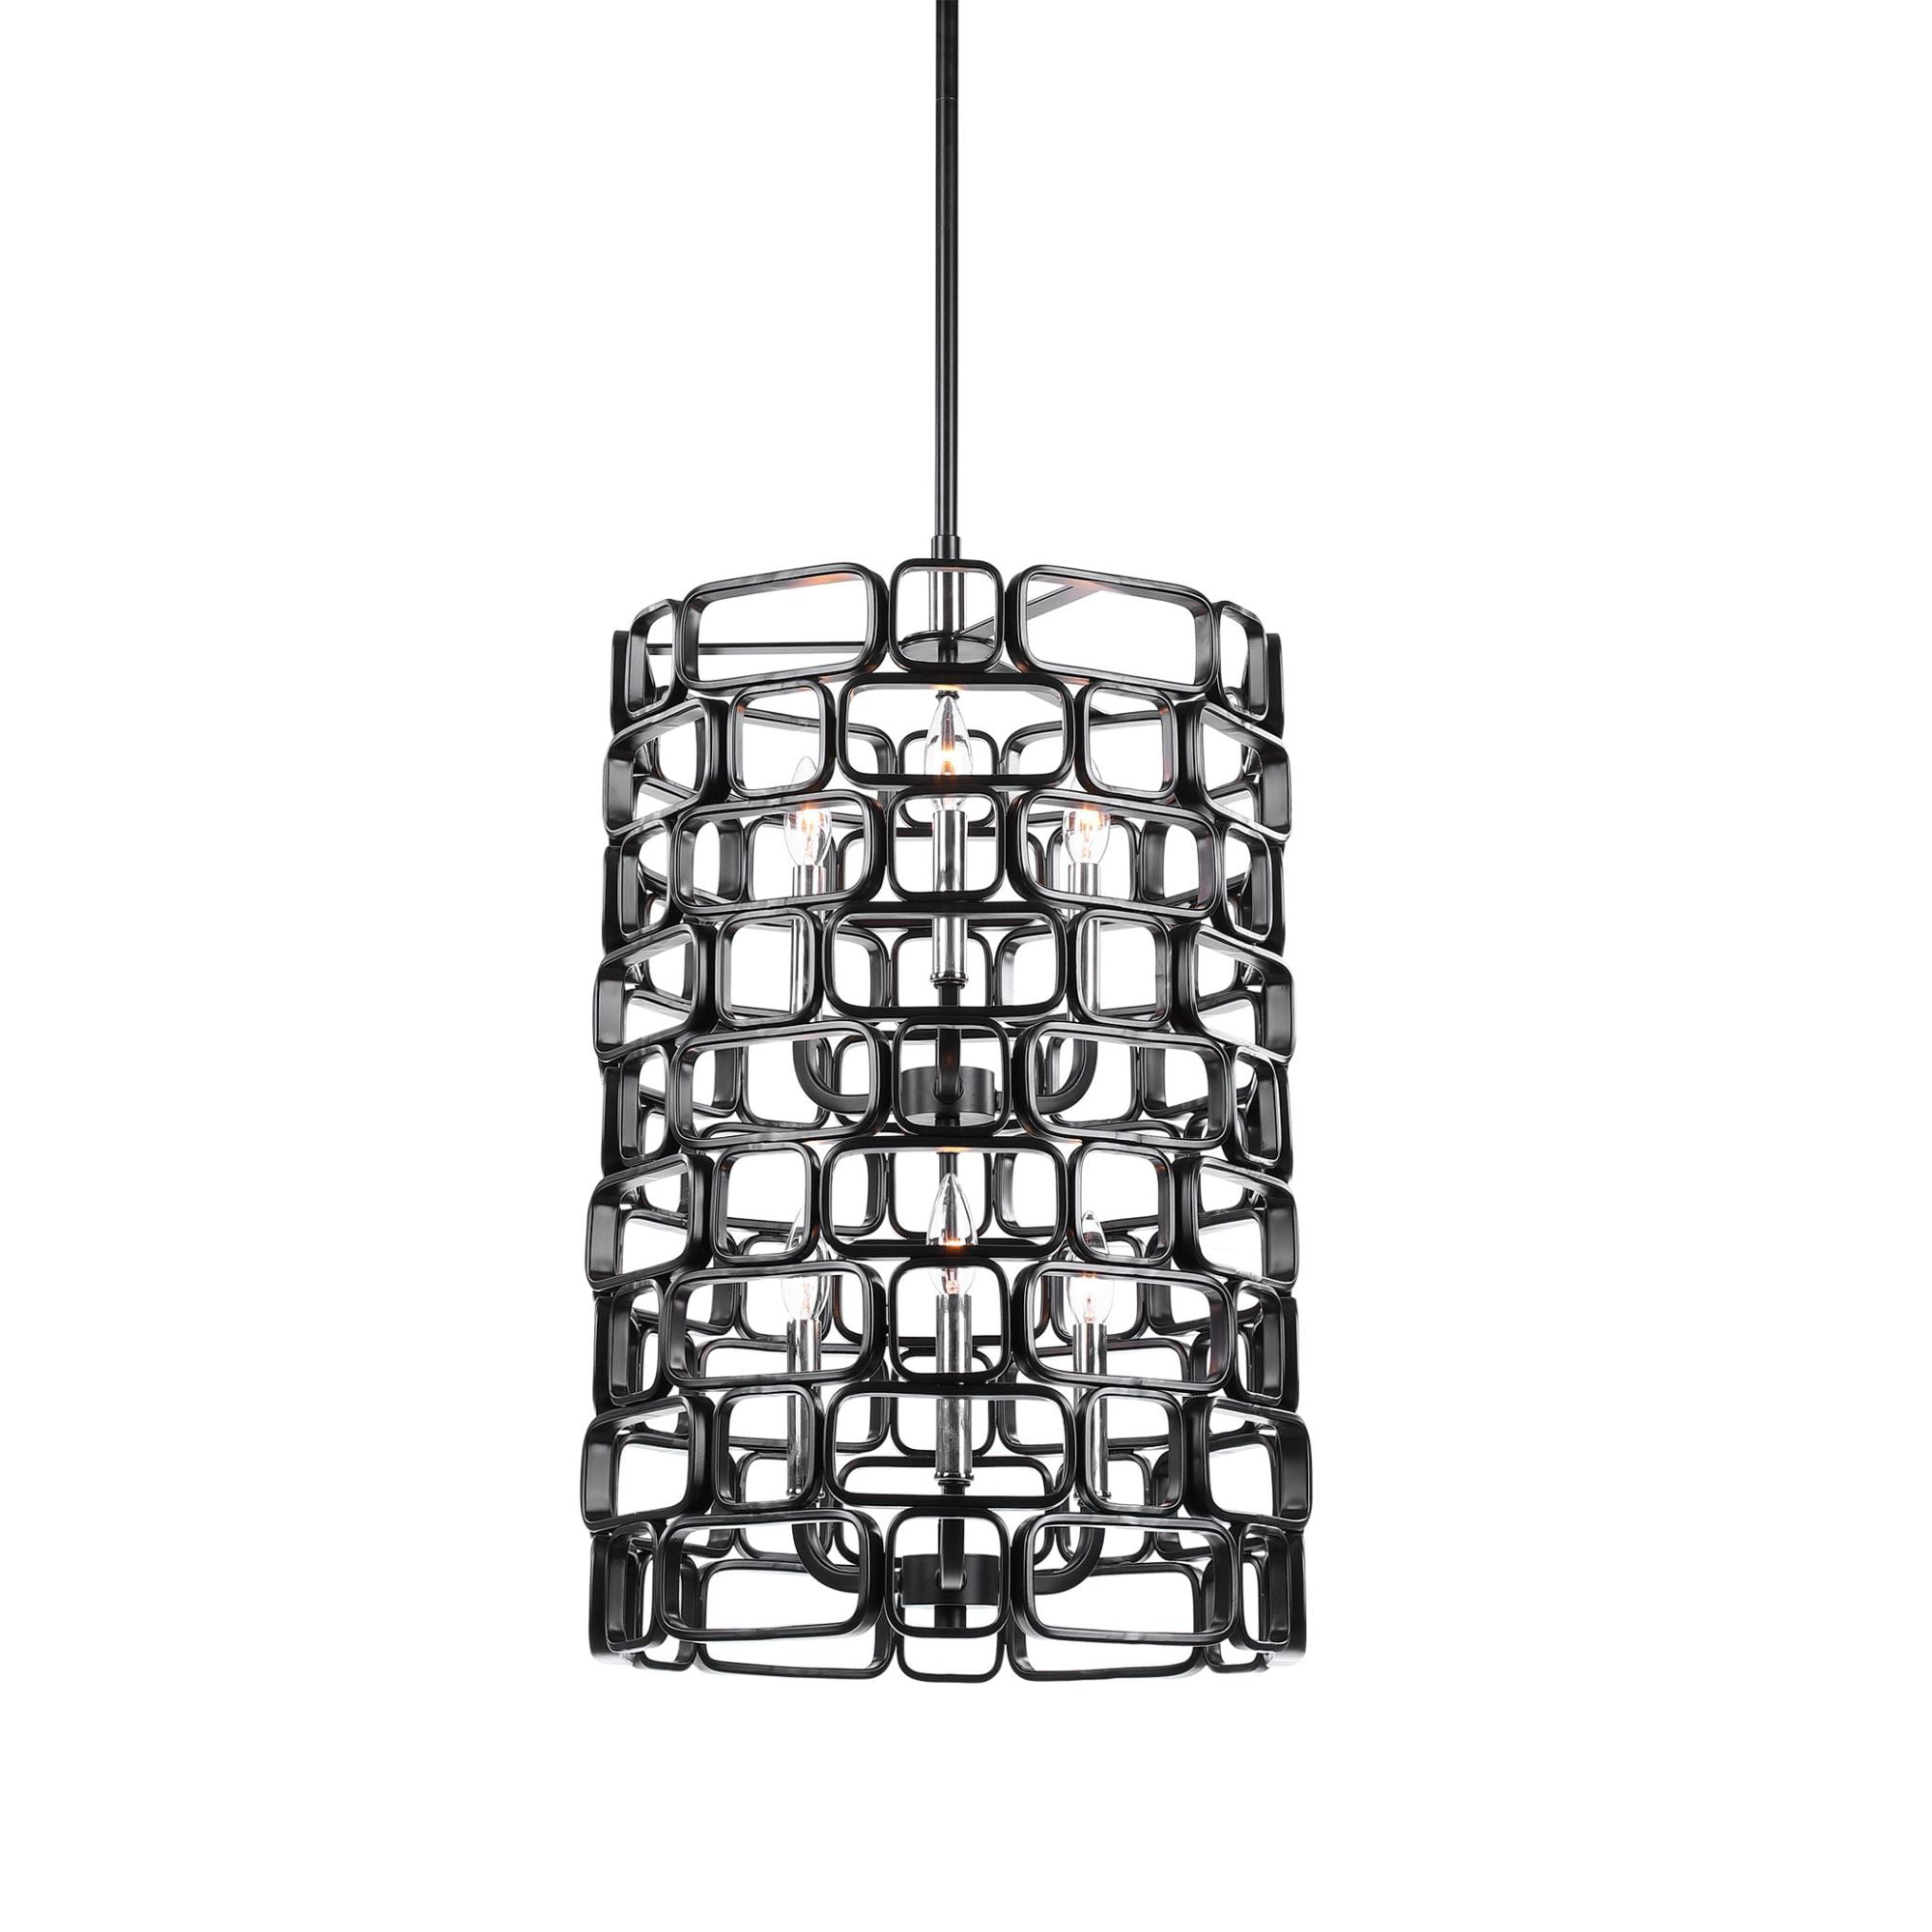 LED Hanging Lights Wood Lattice Pendulum Ceiling Cage Stand Lamp Table Spotlight